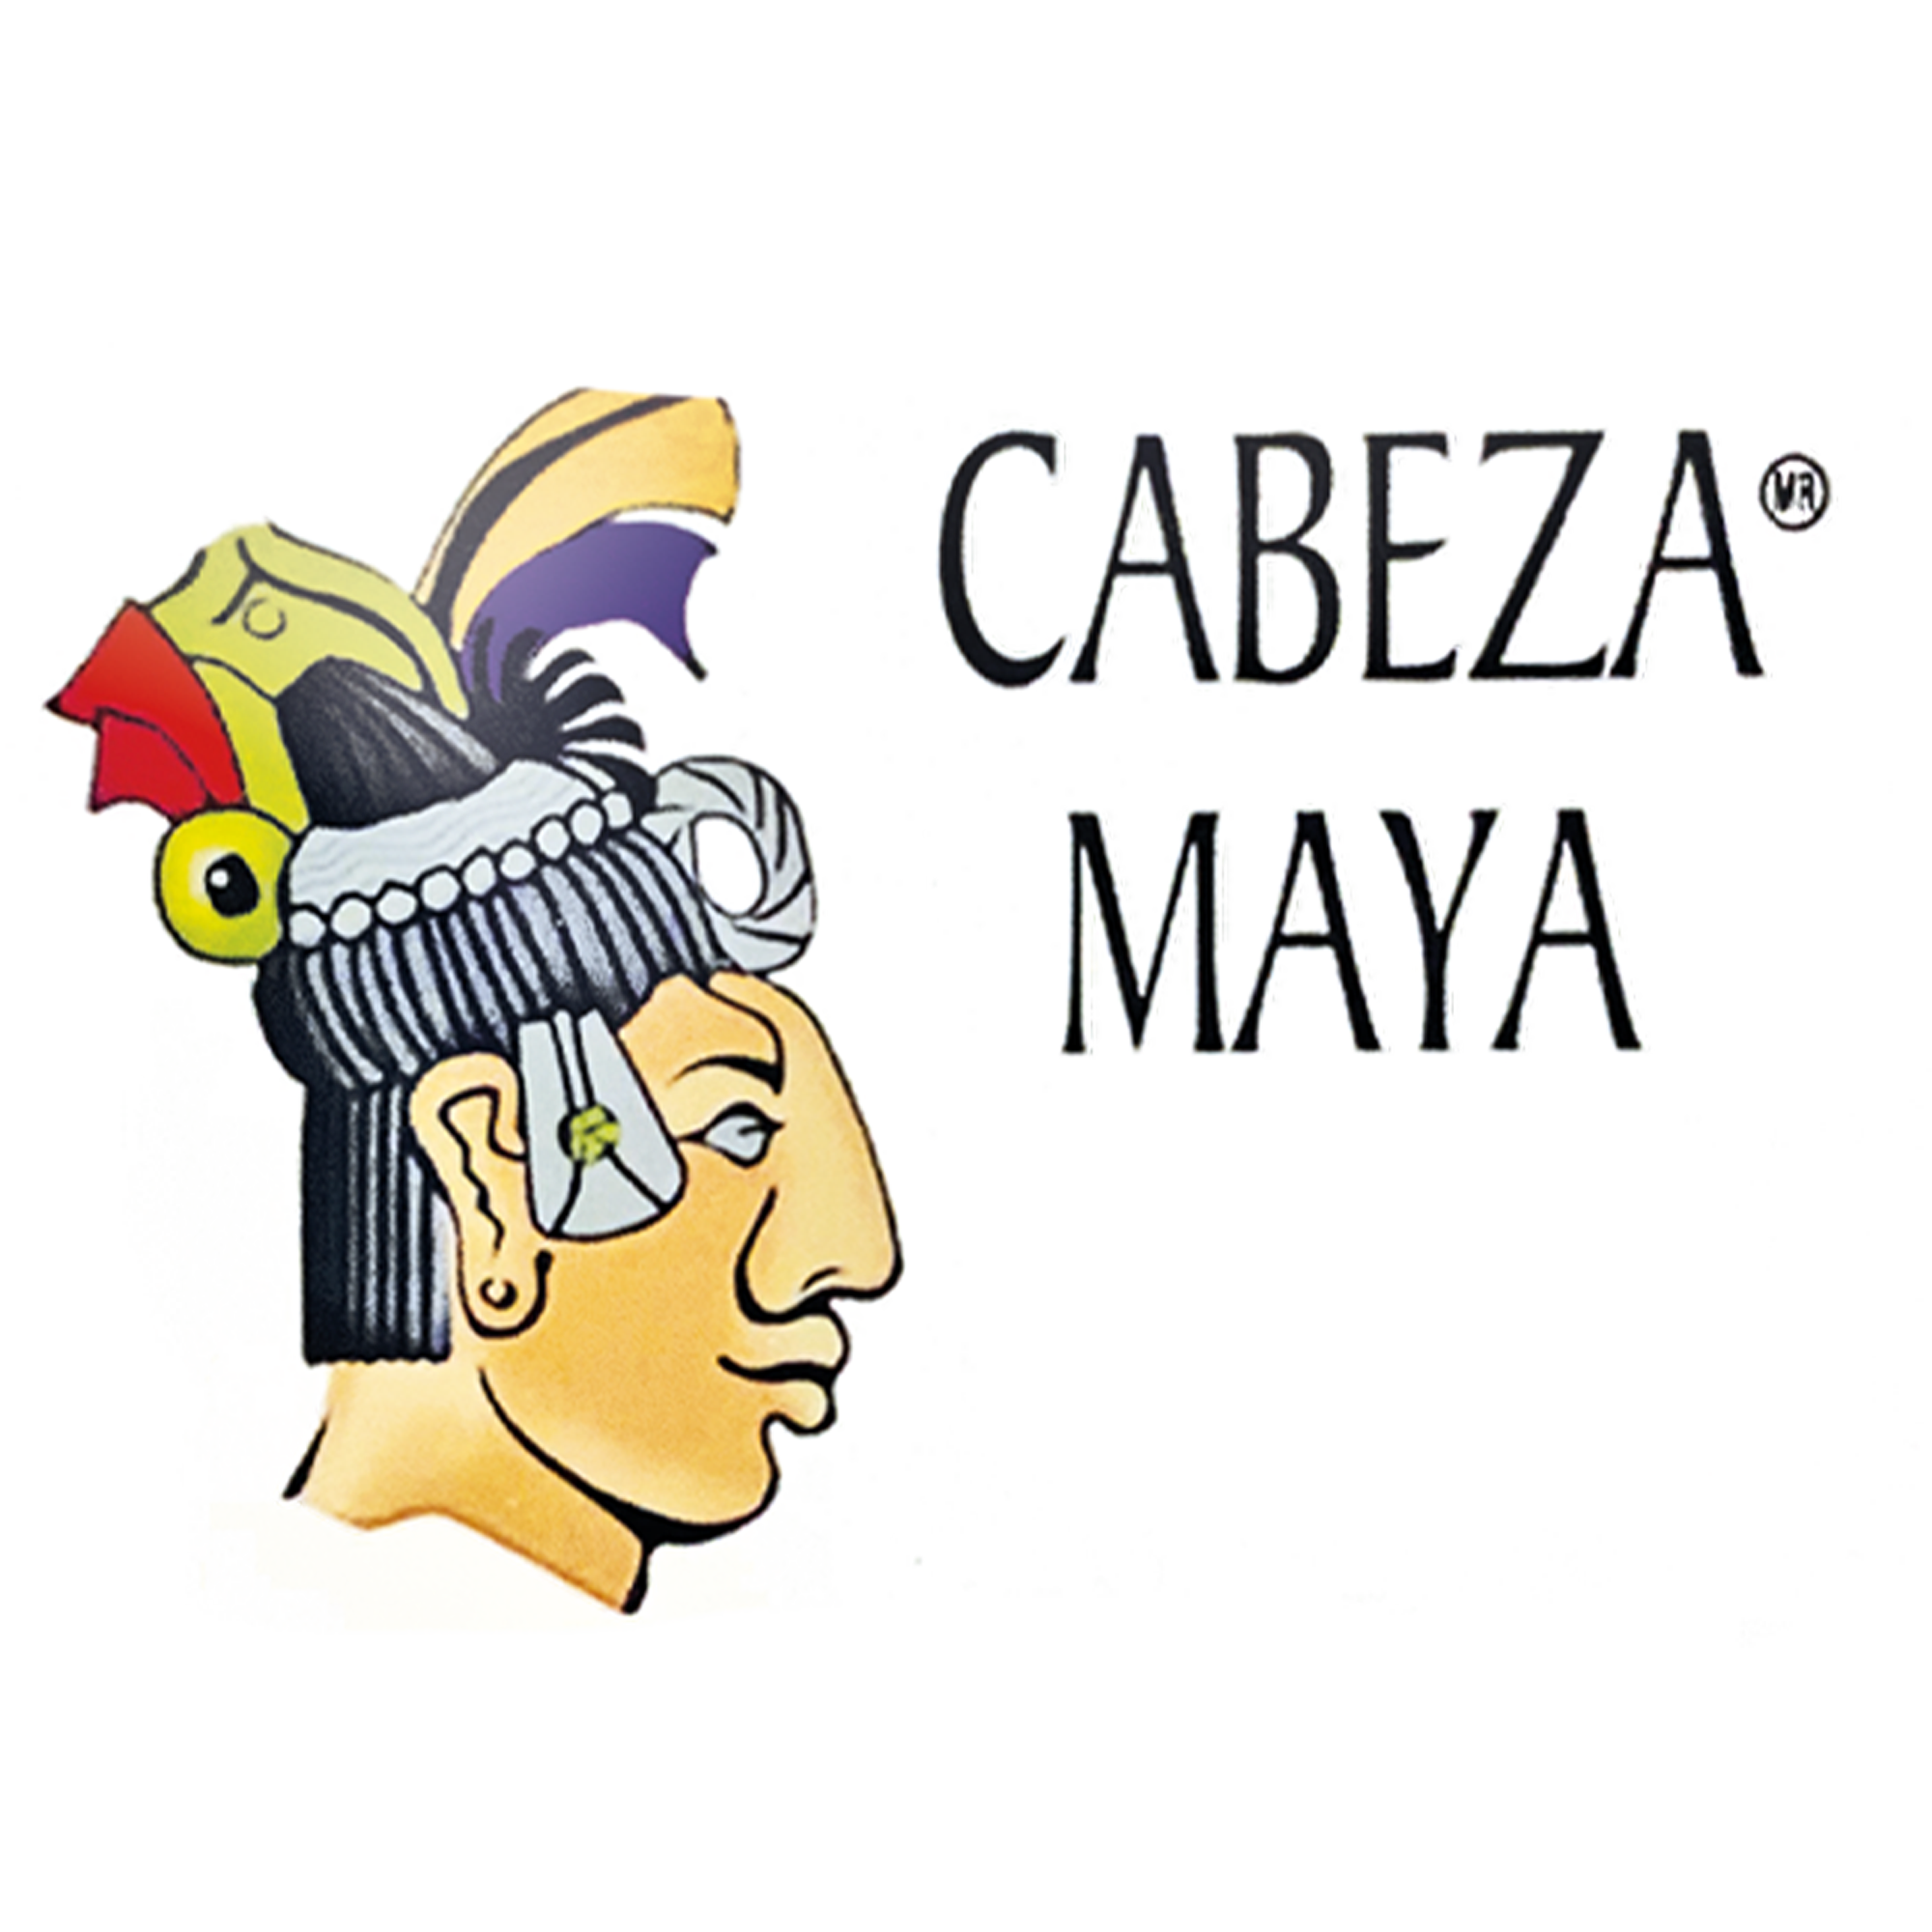 Licores Cabeza Maya